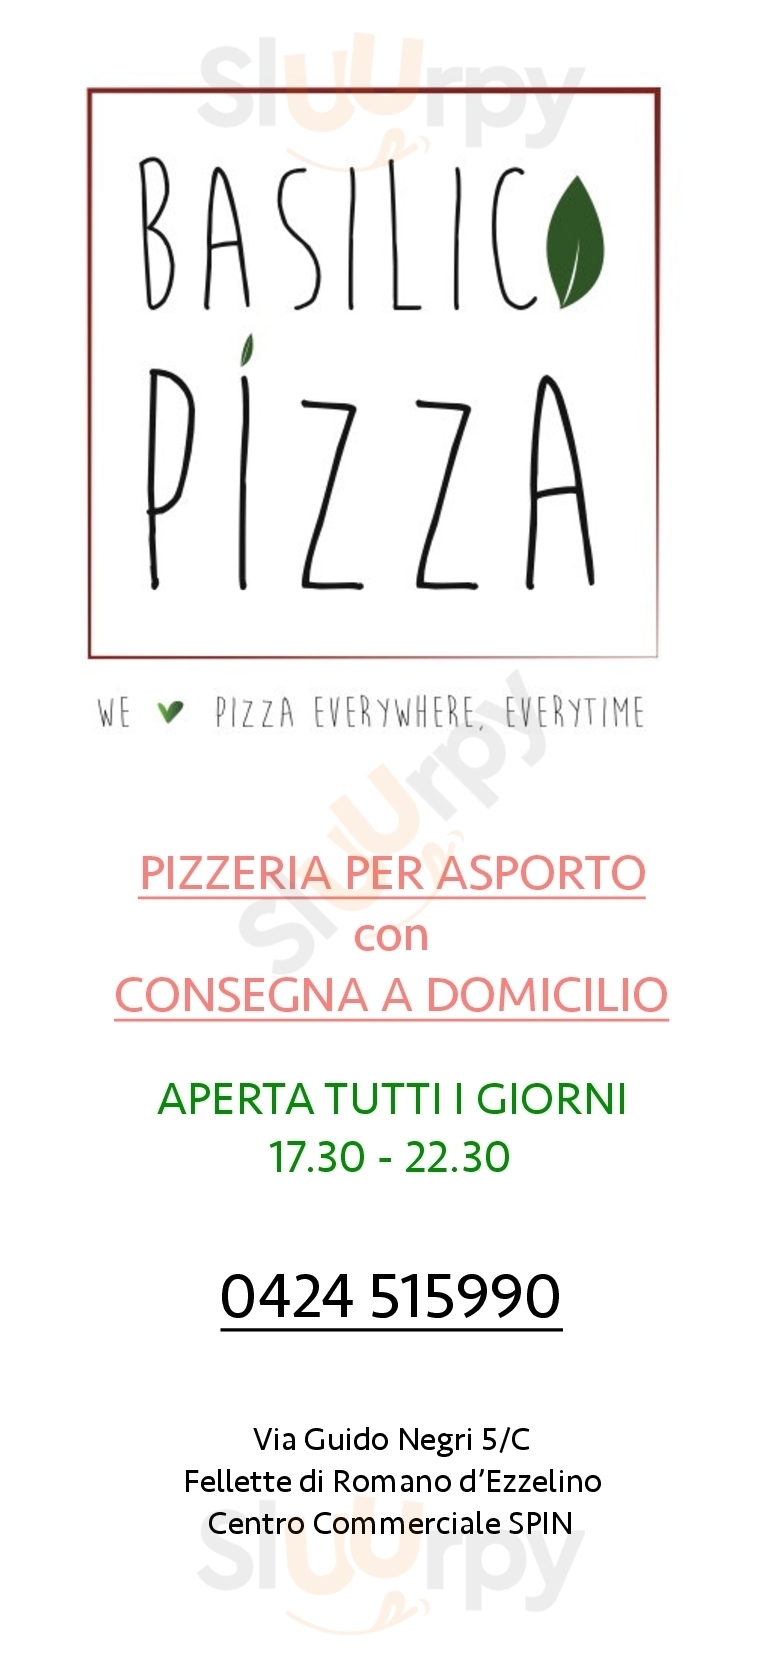 Basilico Pizza Romano d'Ezzelino menù 1 pagina